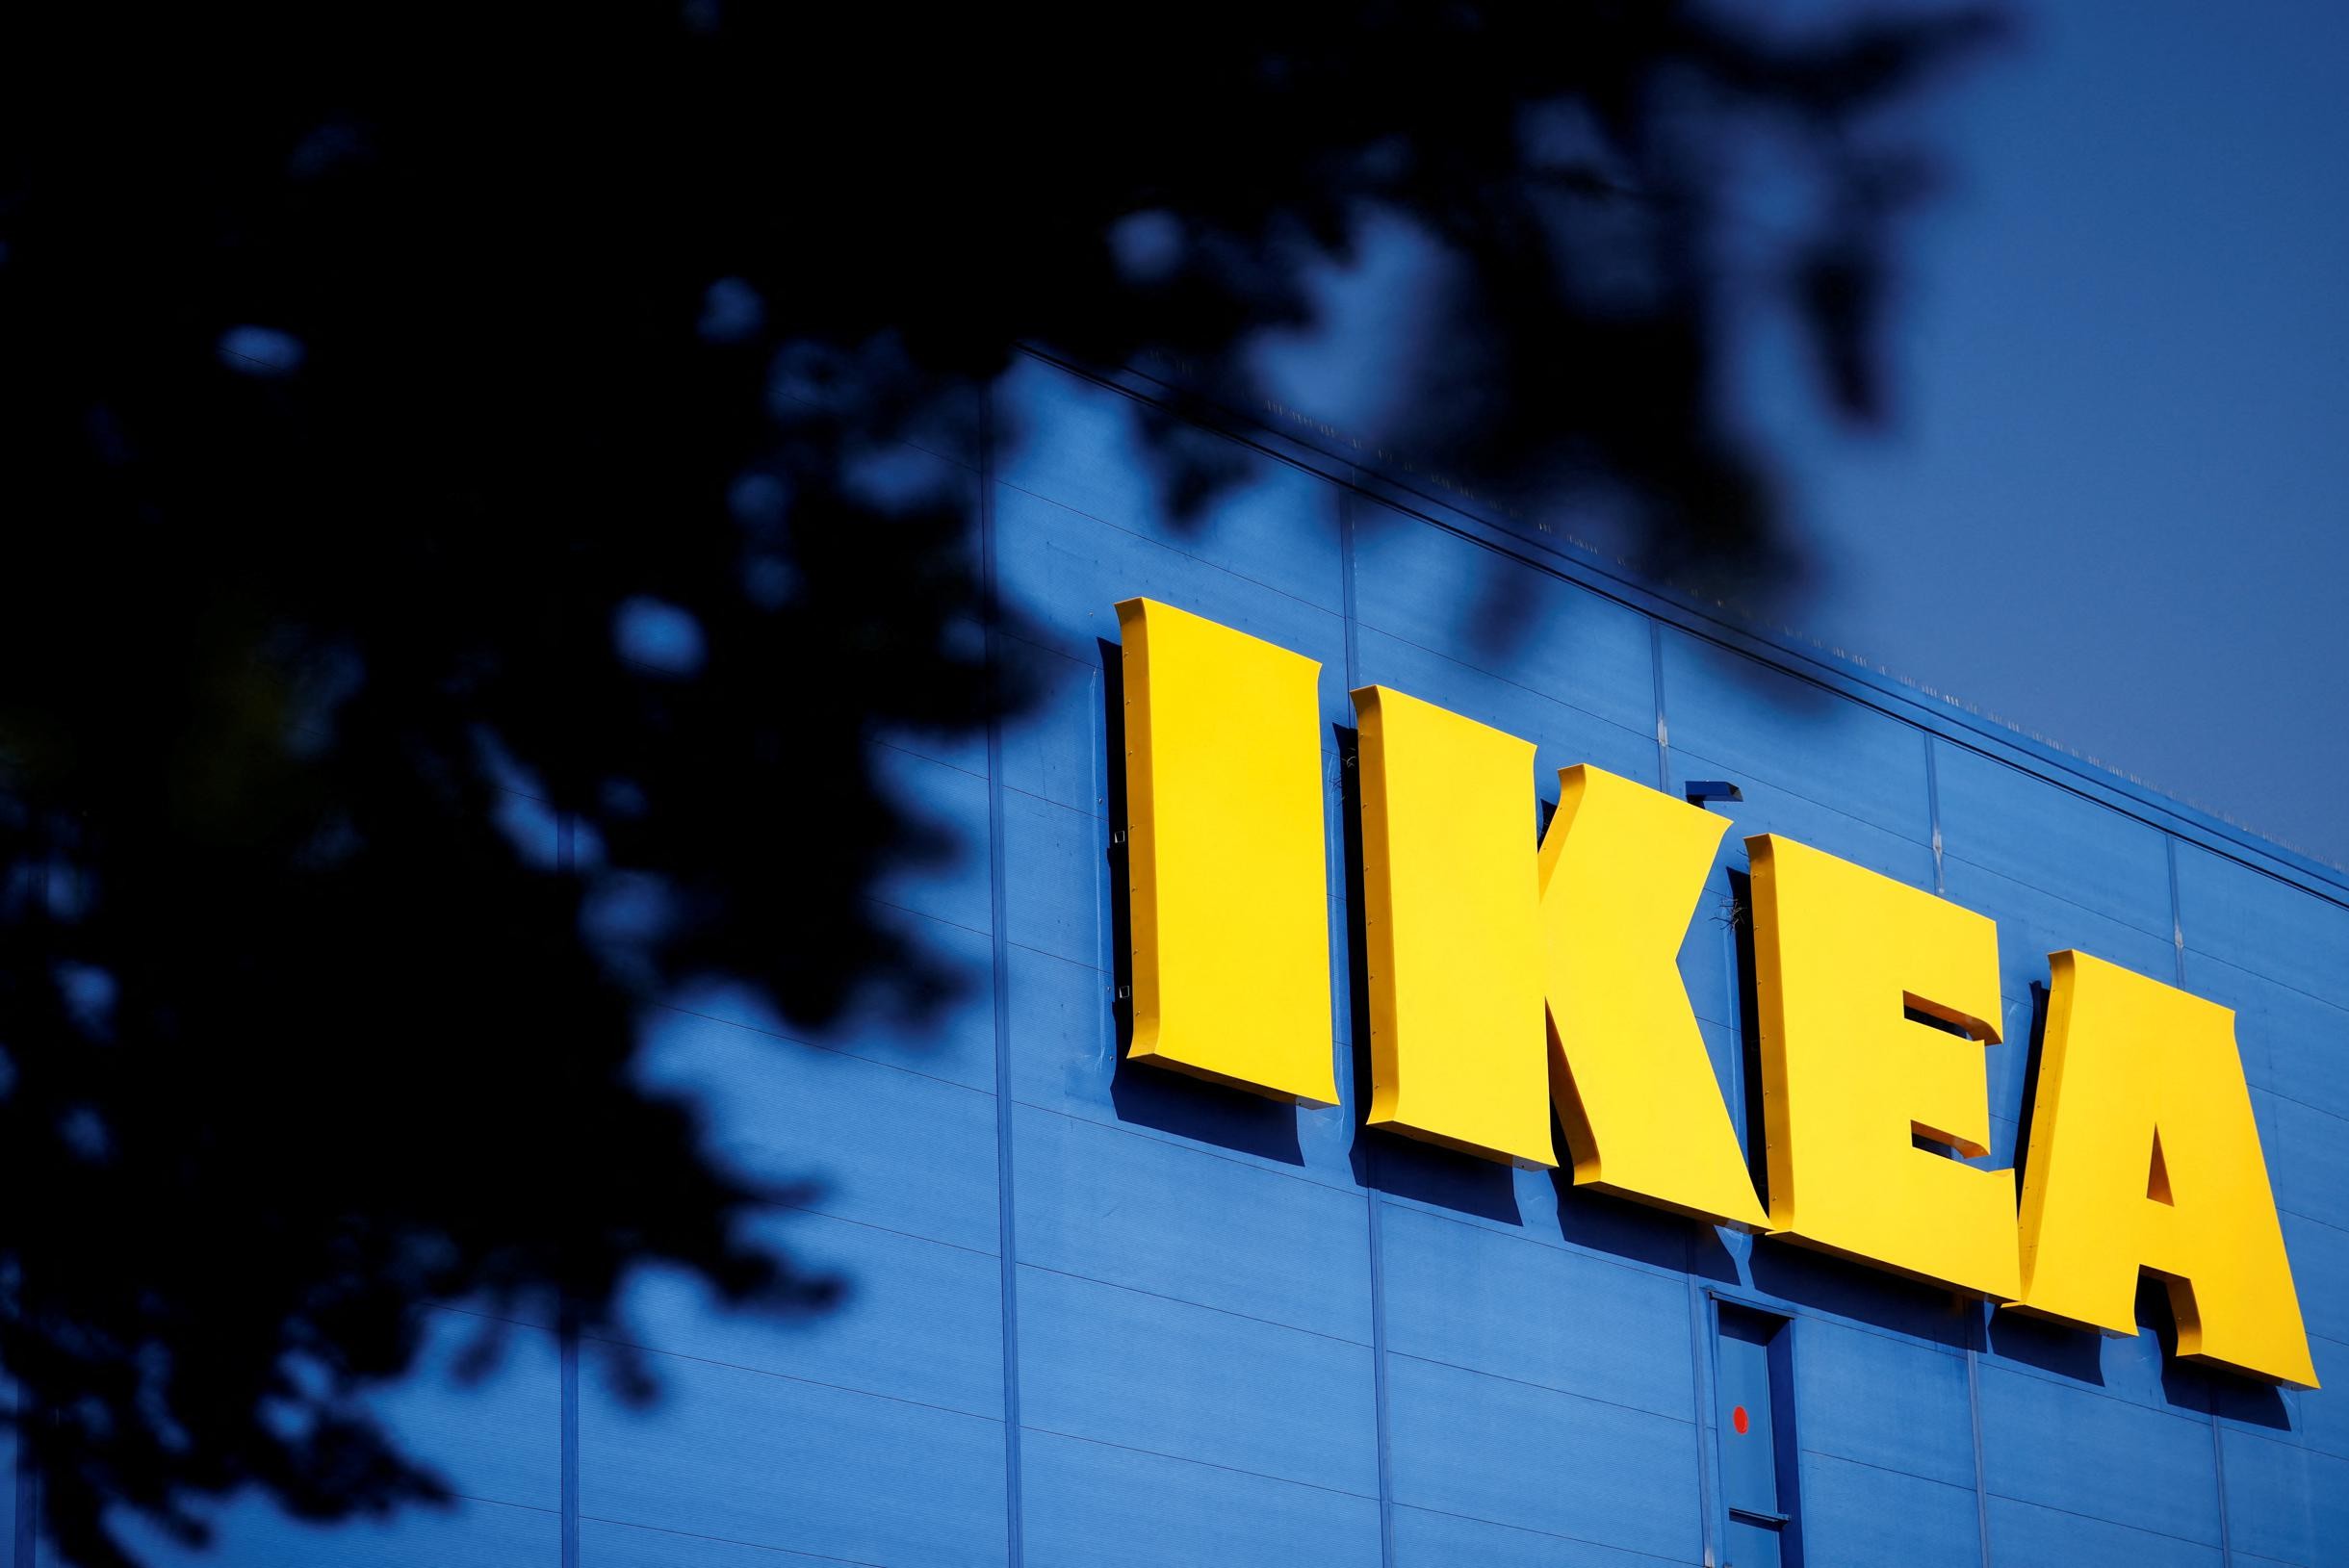 Ikea invests 3 billion euros in their retail network